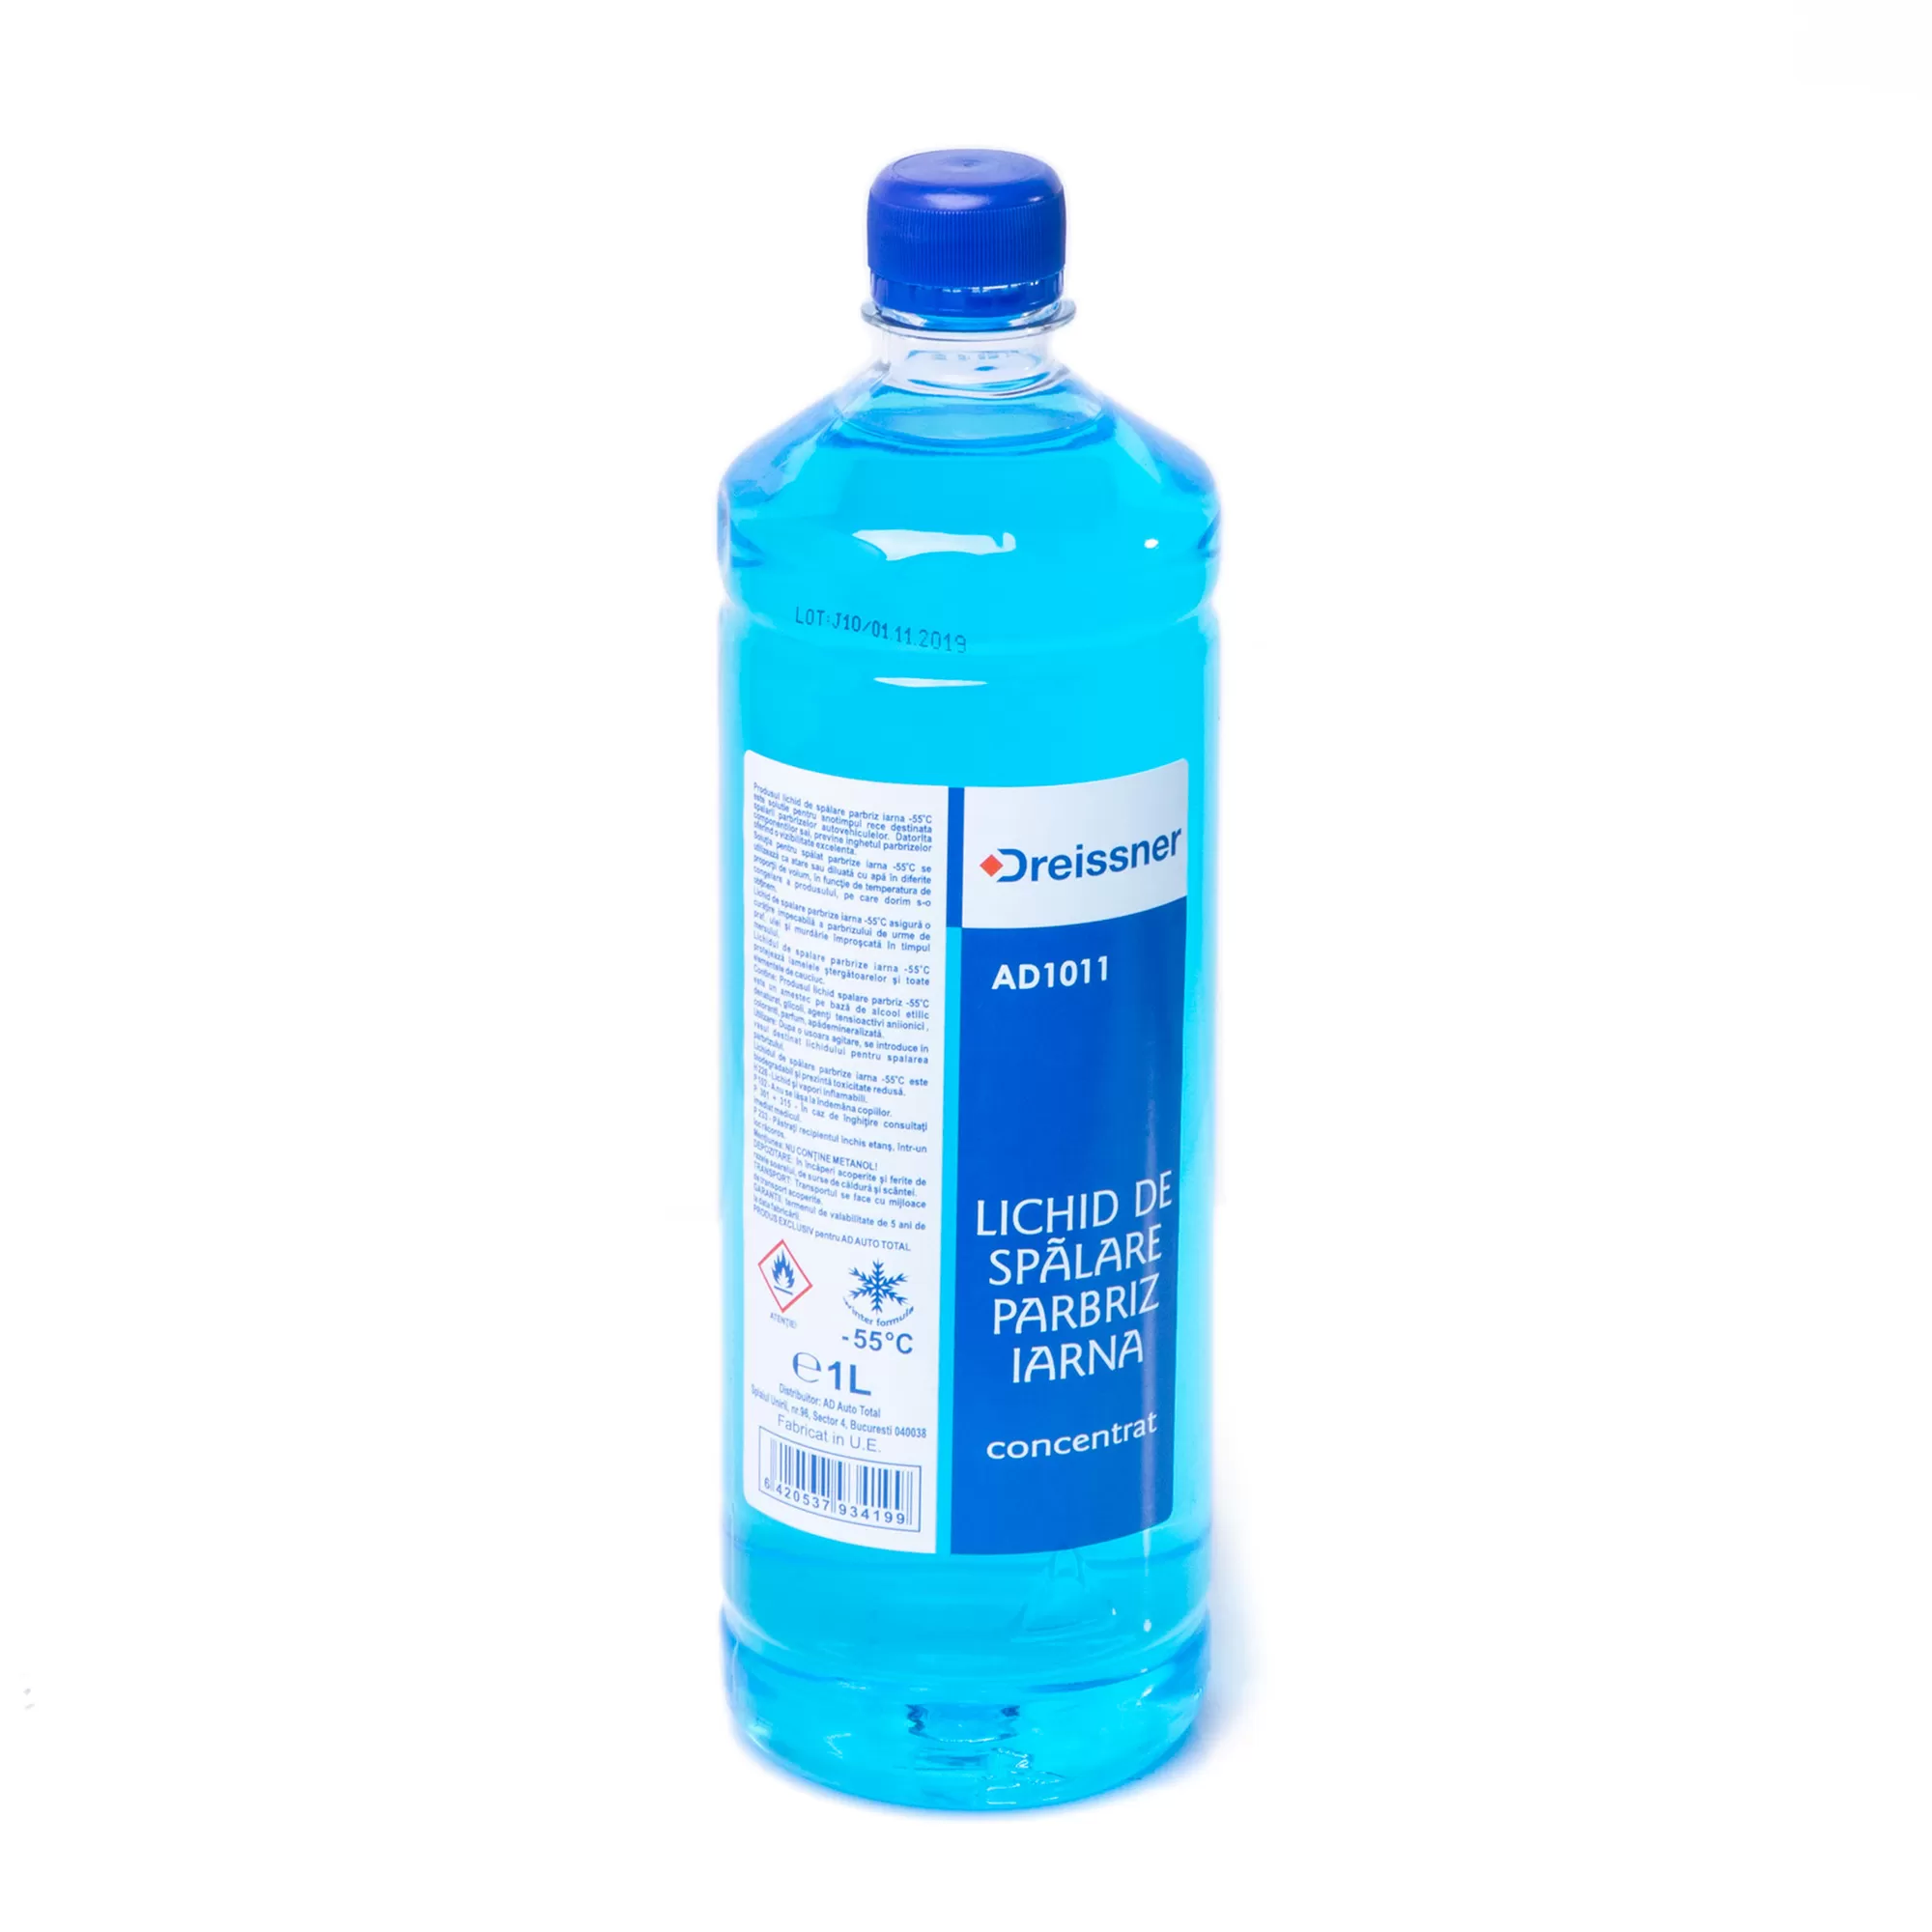 lichid parbriz iarna concentrat (1l) -65 c - ad-fd-lsnbb AD1011 AD PRODUCTS